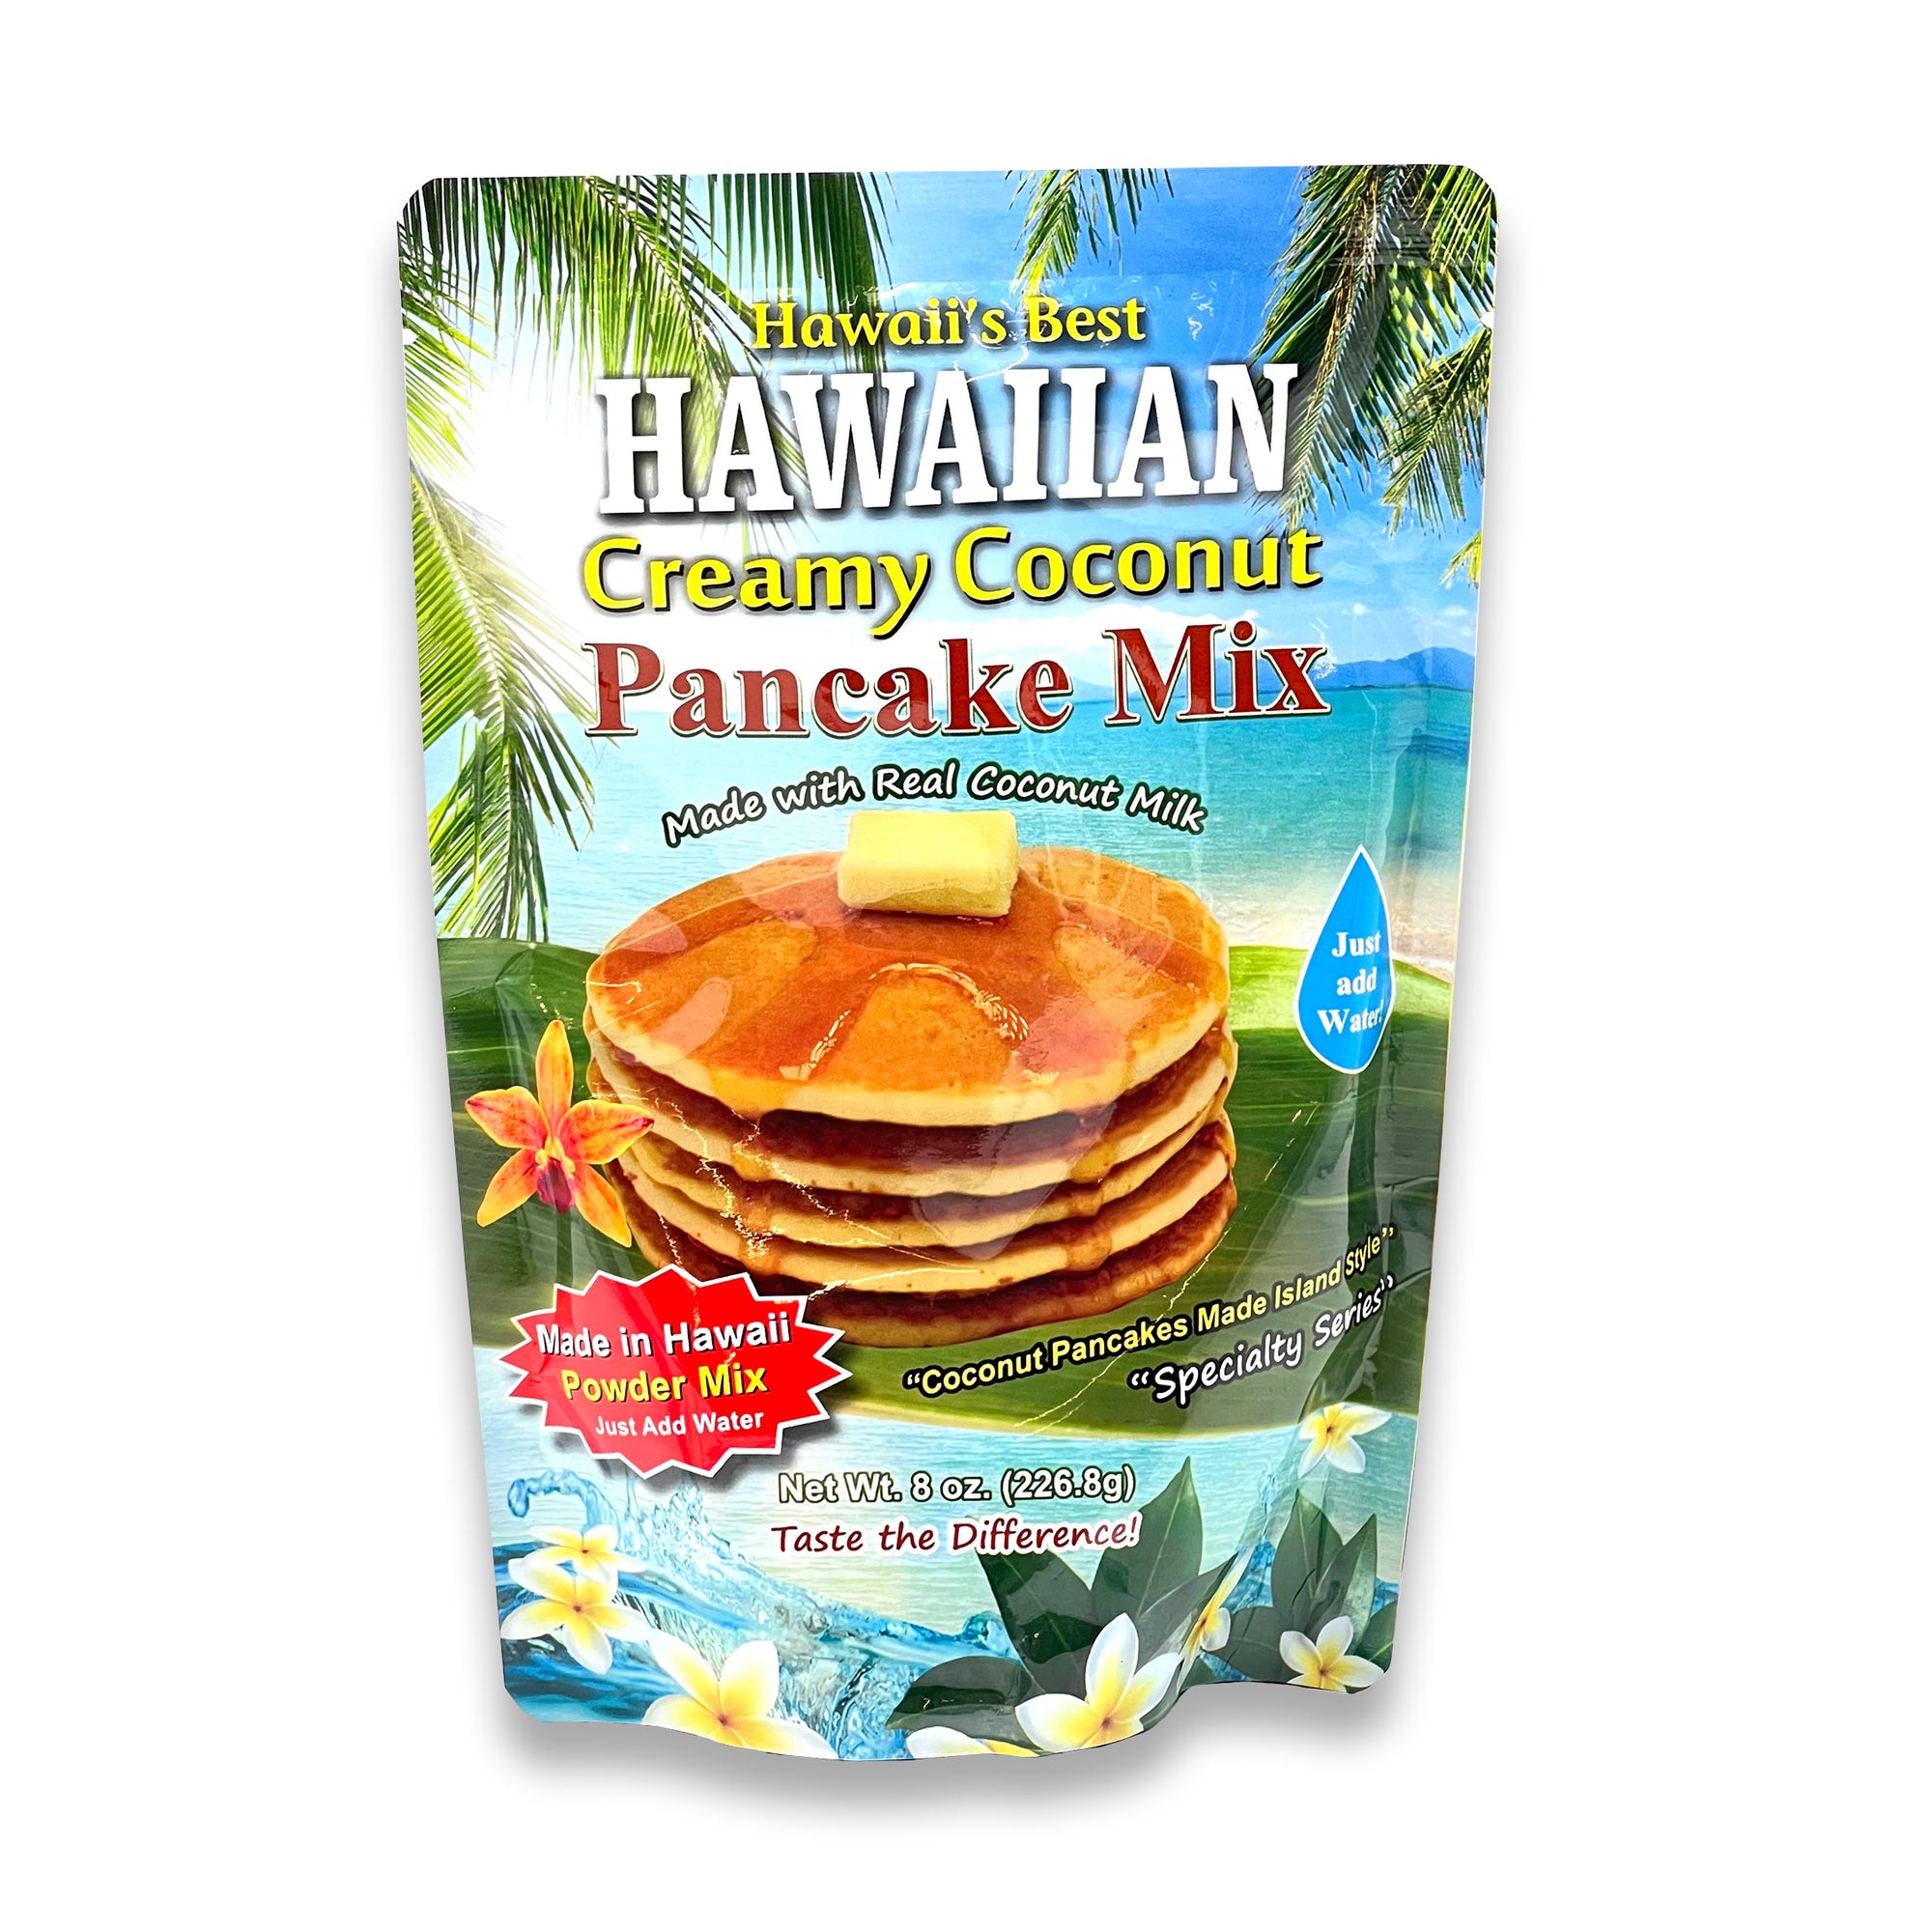 Pop-Up Mākeke - Hawaii's Best Mixes - Hawaiian Creamy Coconut Pancake Mix - Front View